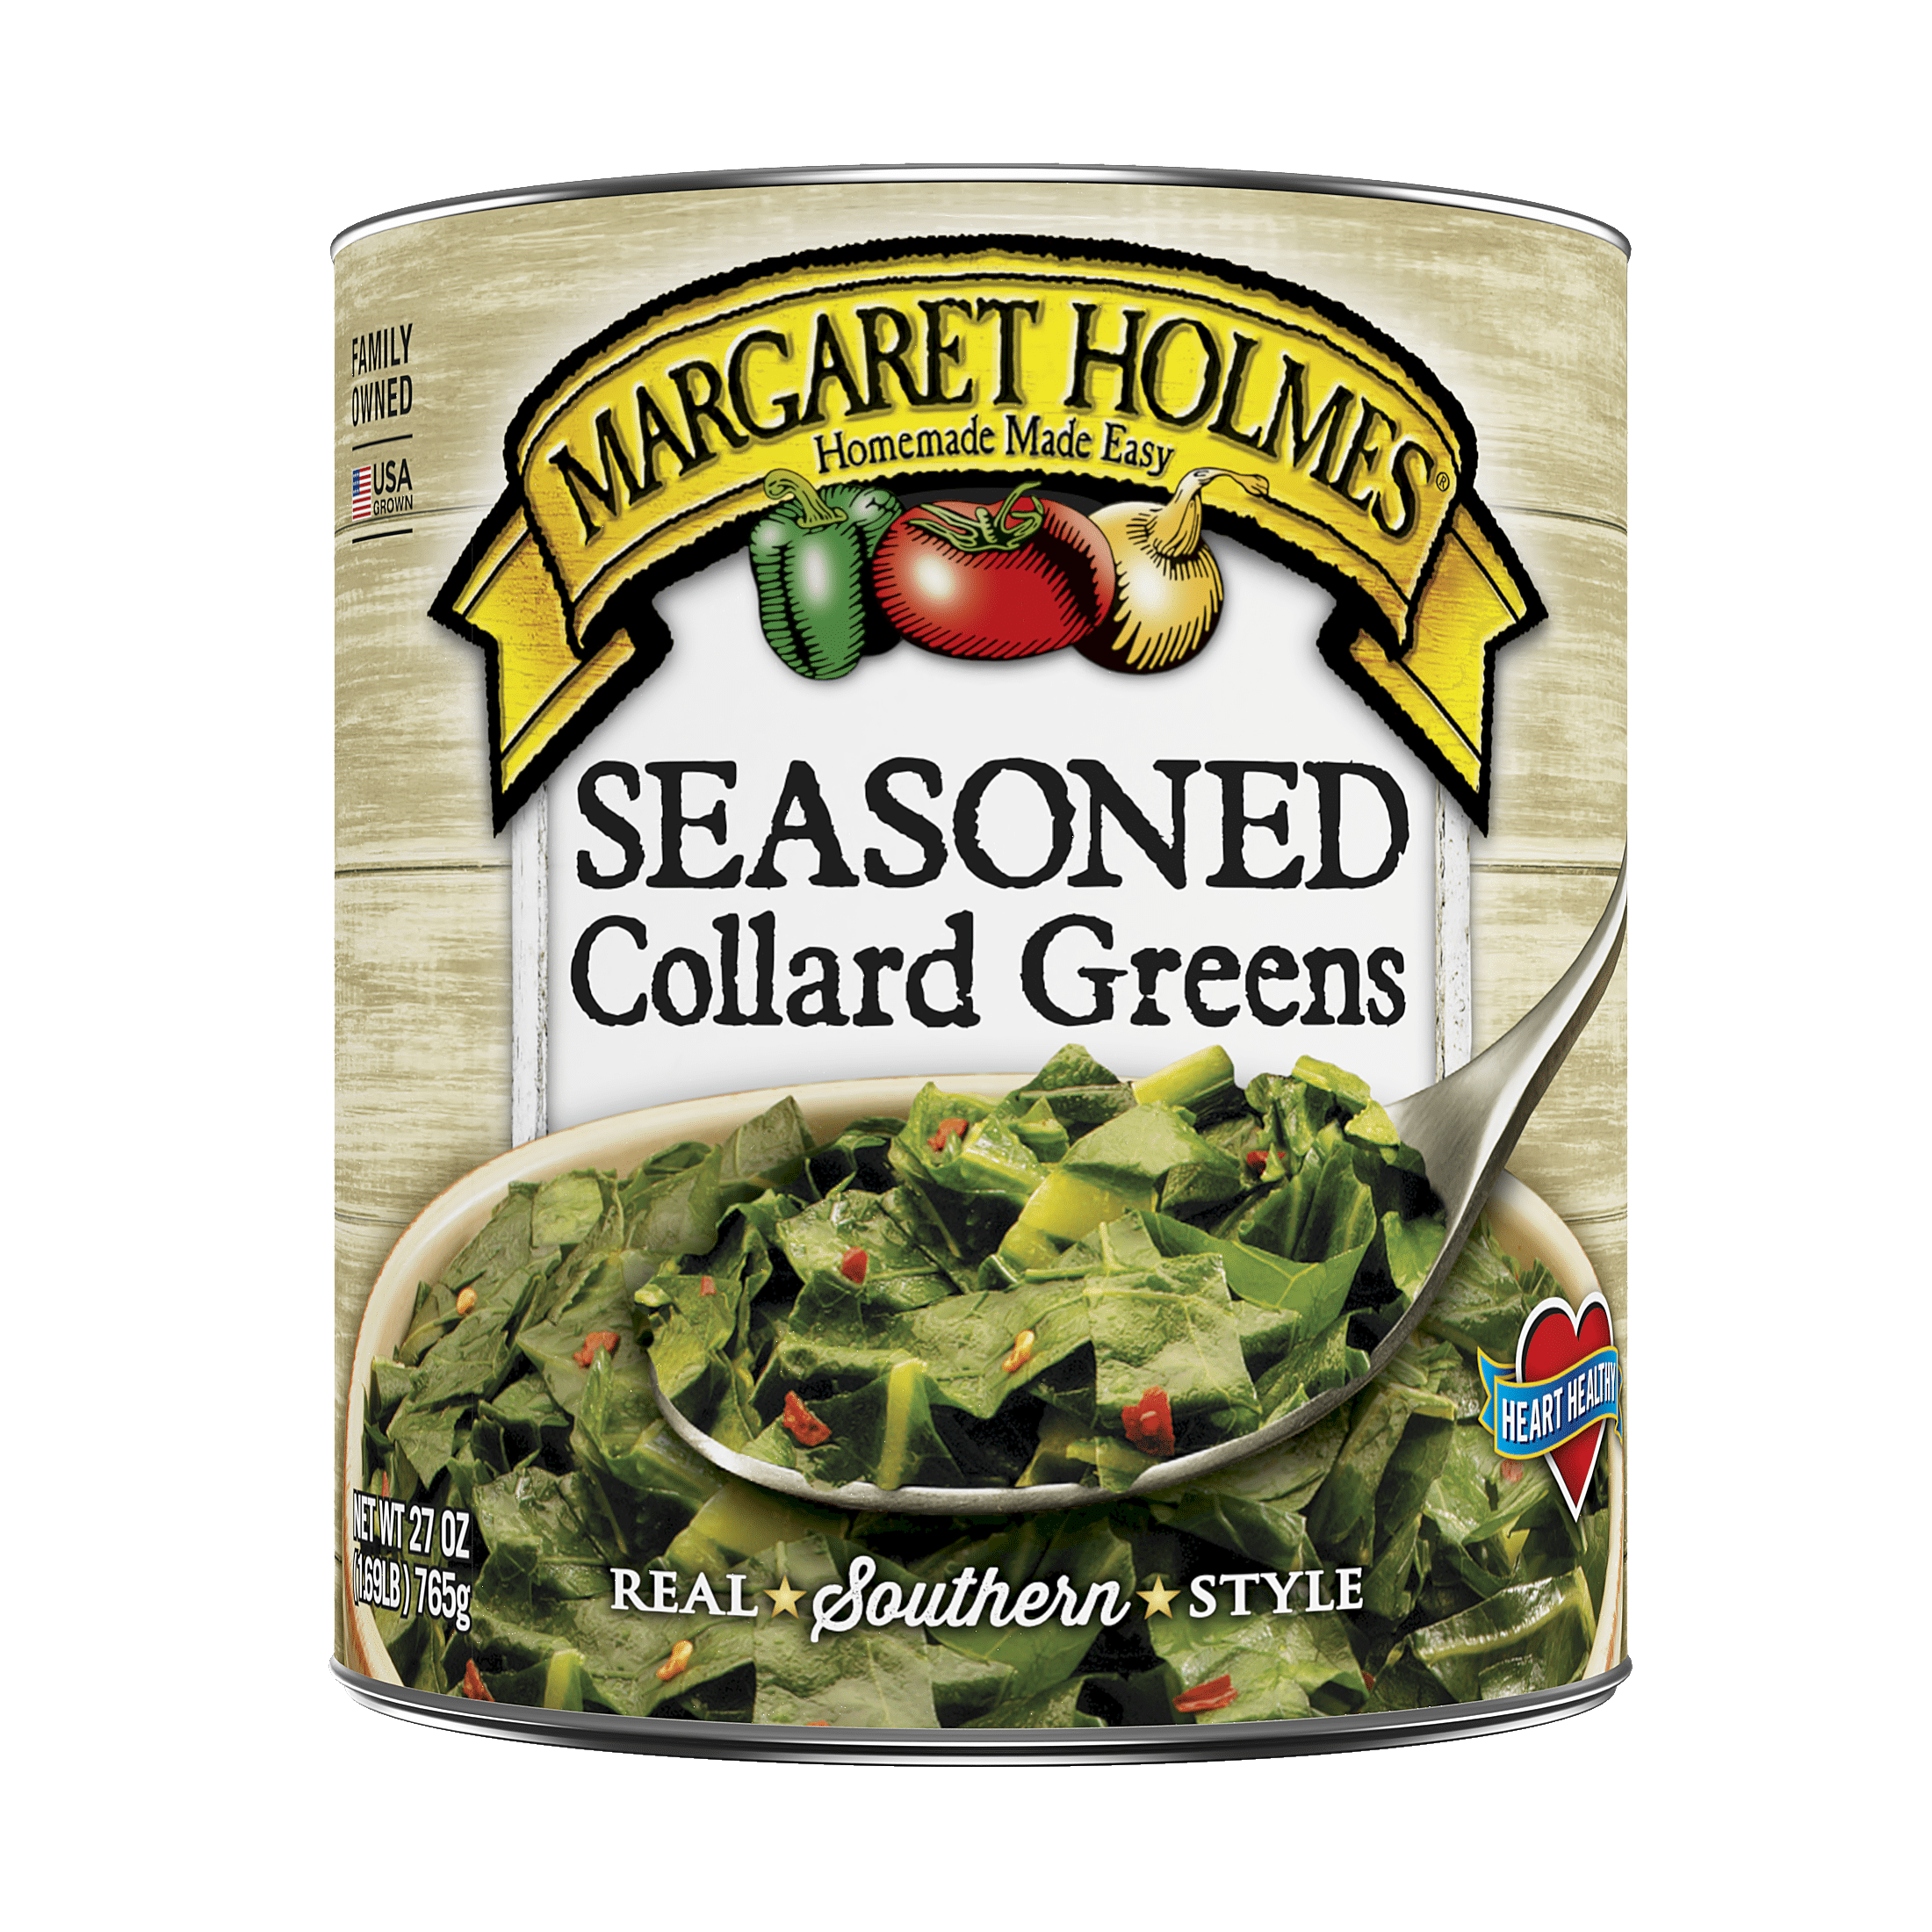 Margaret Holmes Canned Seasoned Collard Greens, 27 oz